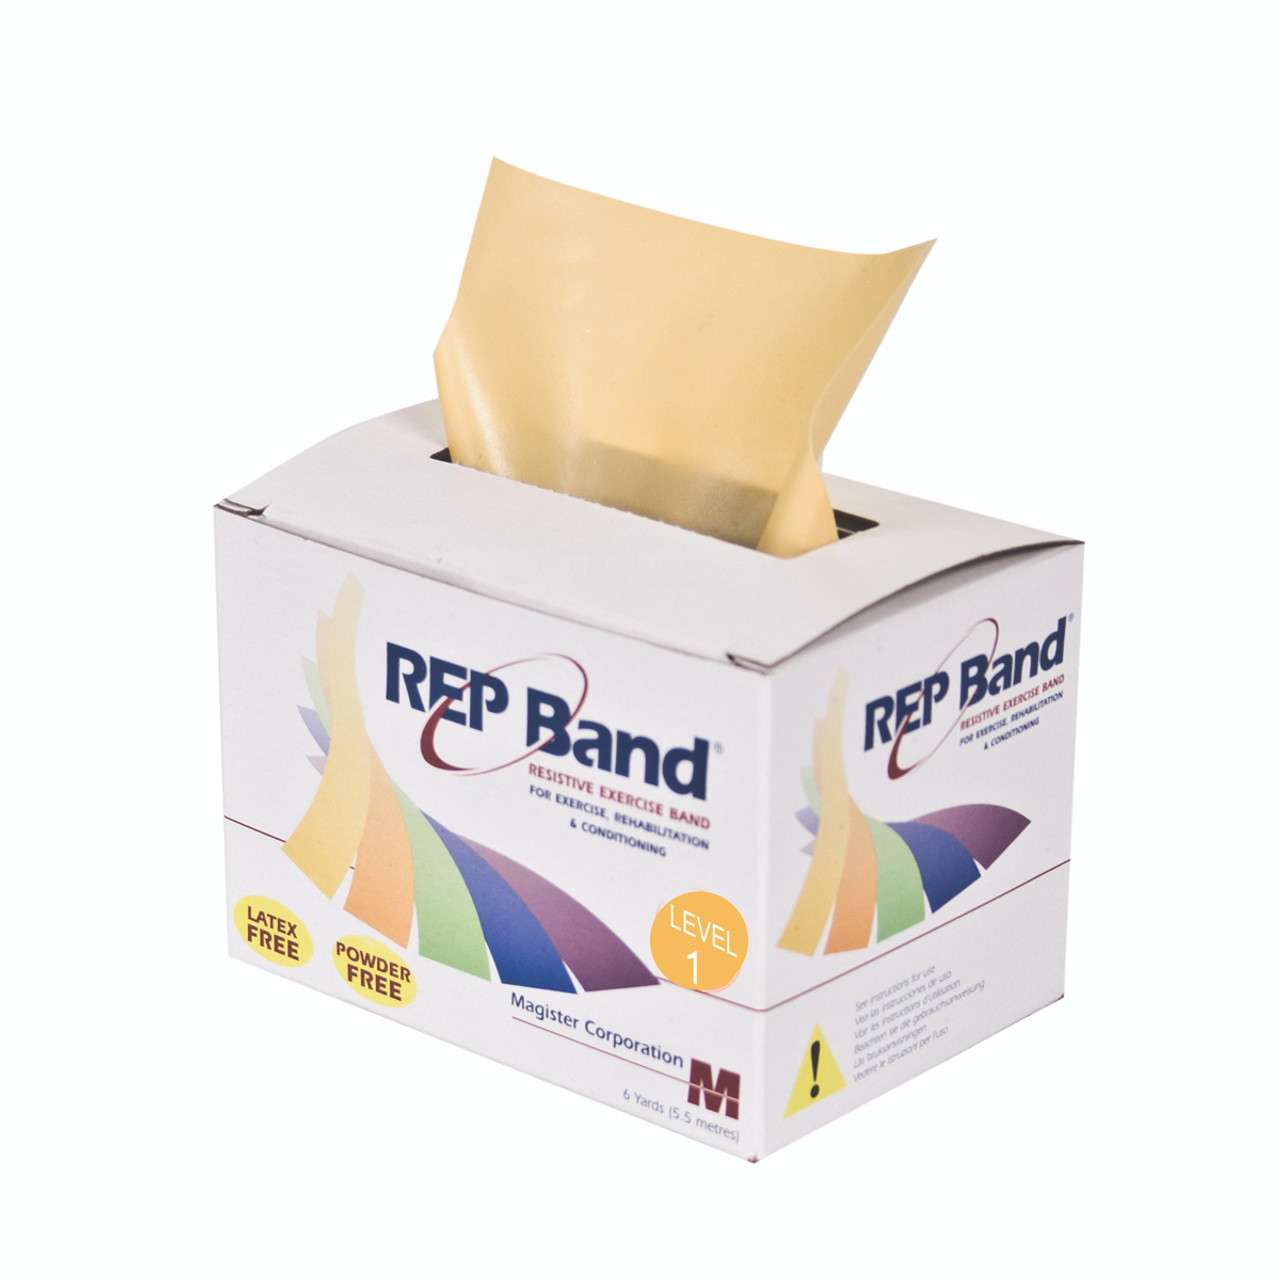 REP Band¨ exercise band - latex free - 6 yard - peach, level 1